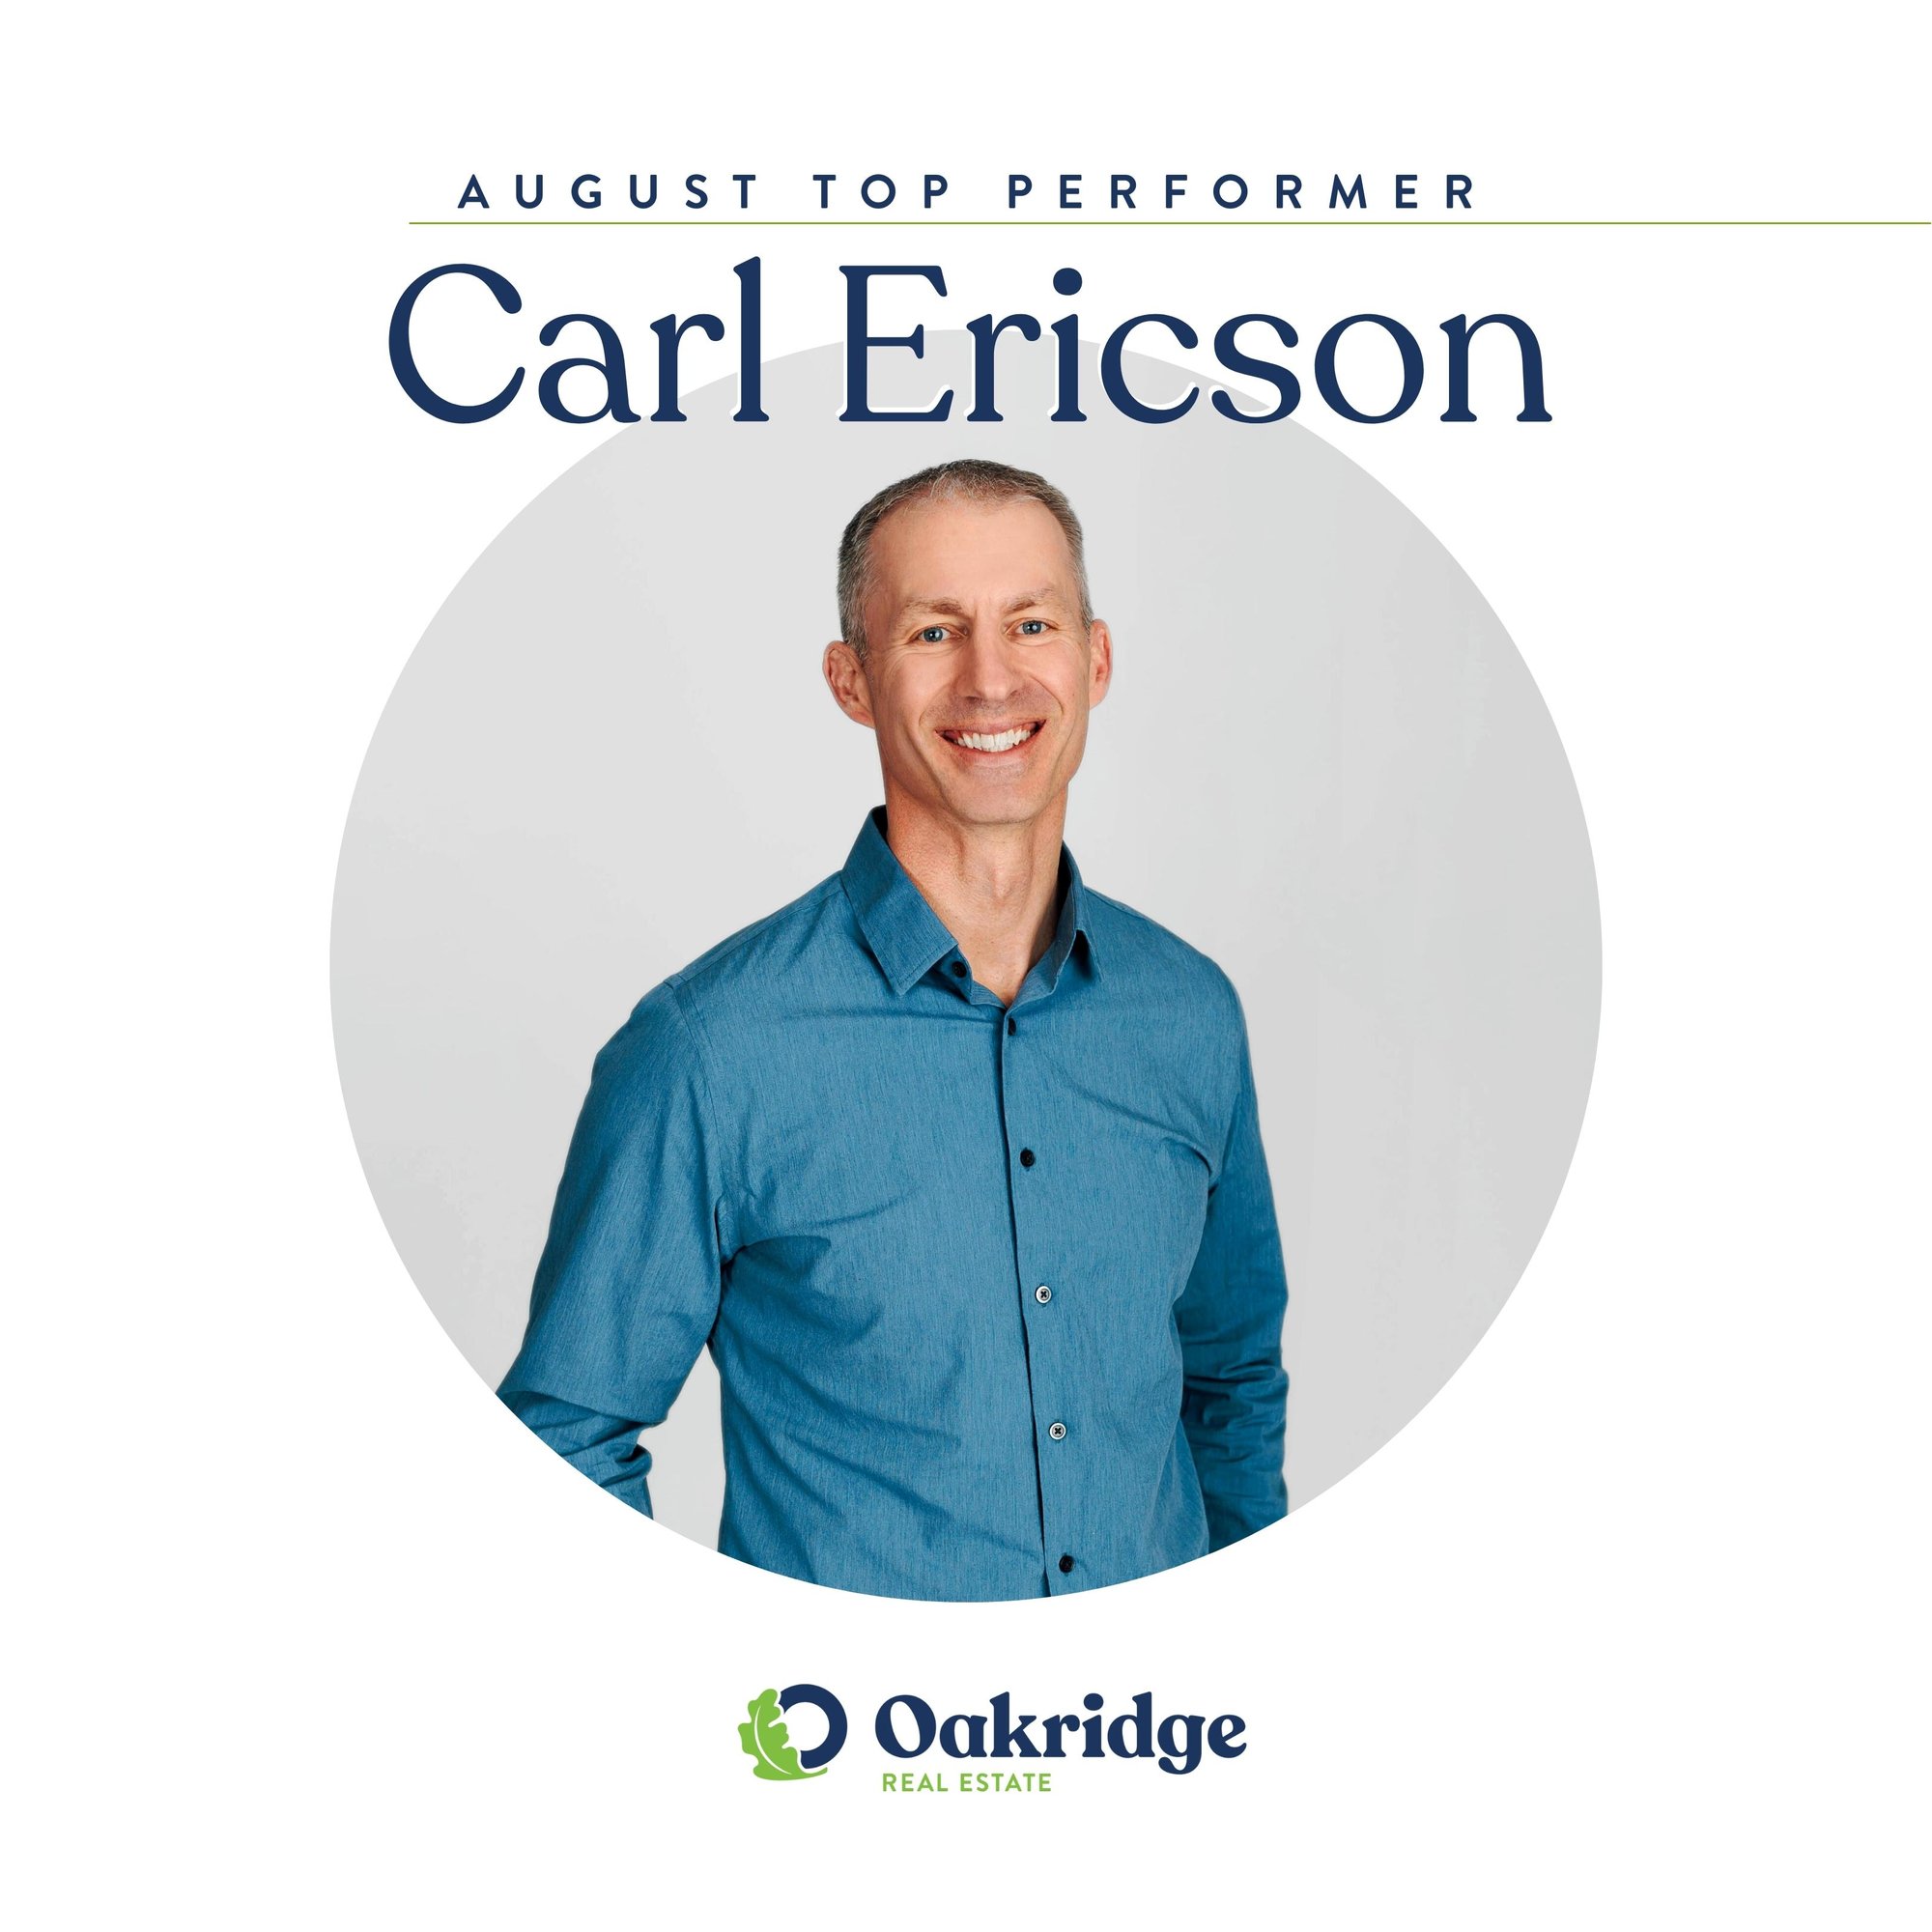 Carl Ericson Oakridge Real Estate August Top Performer